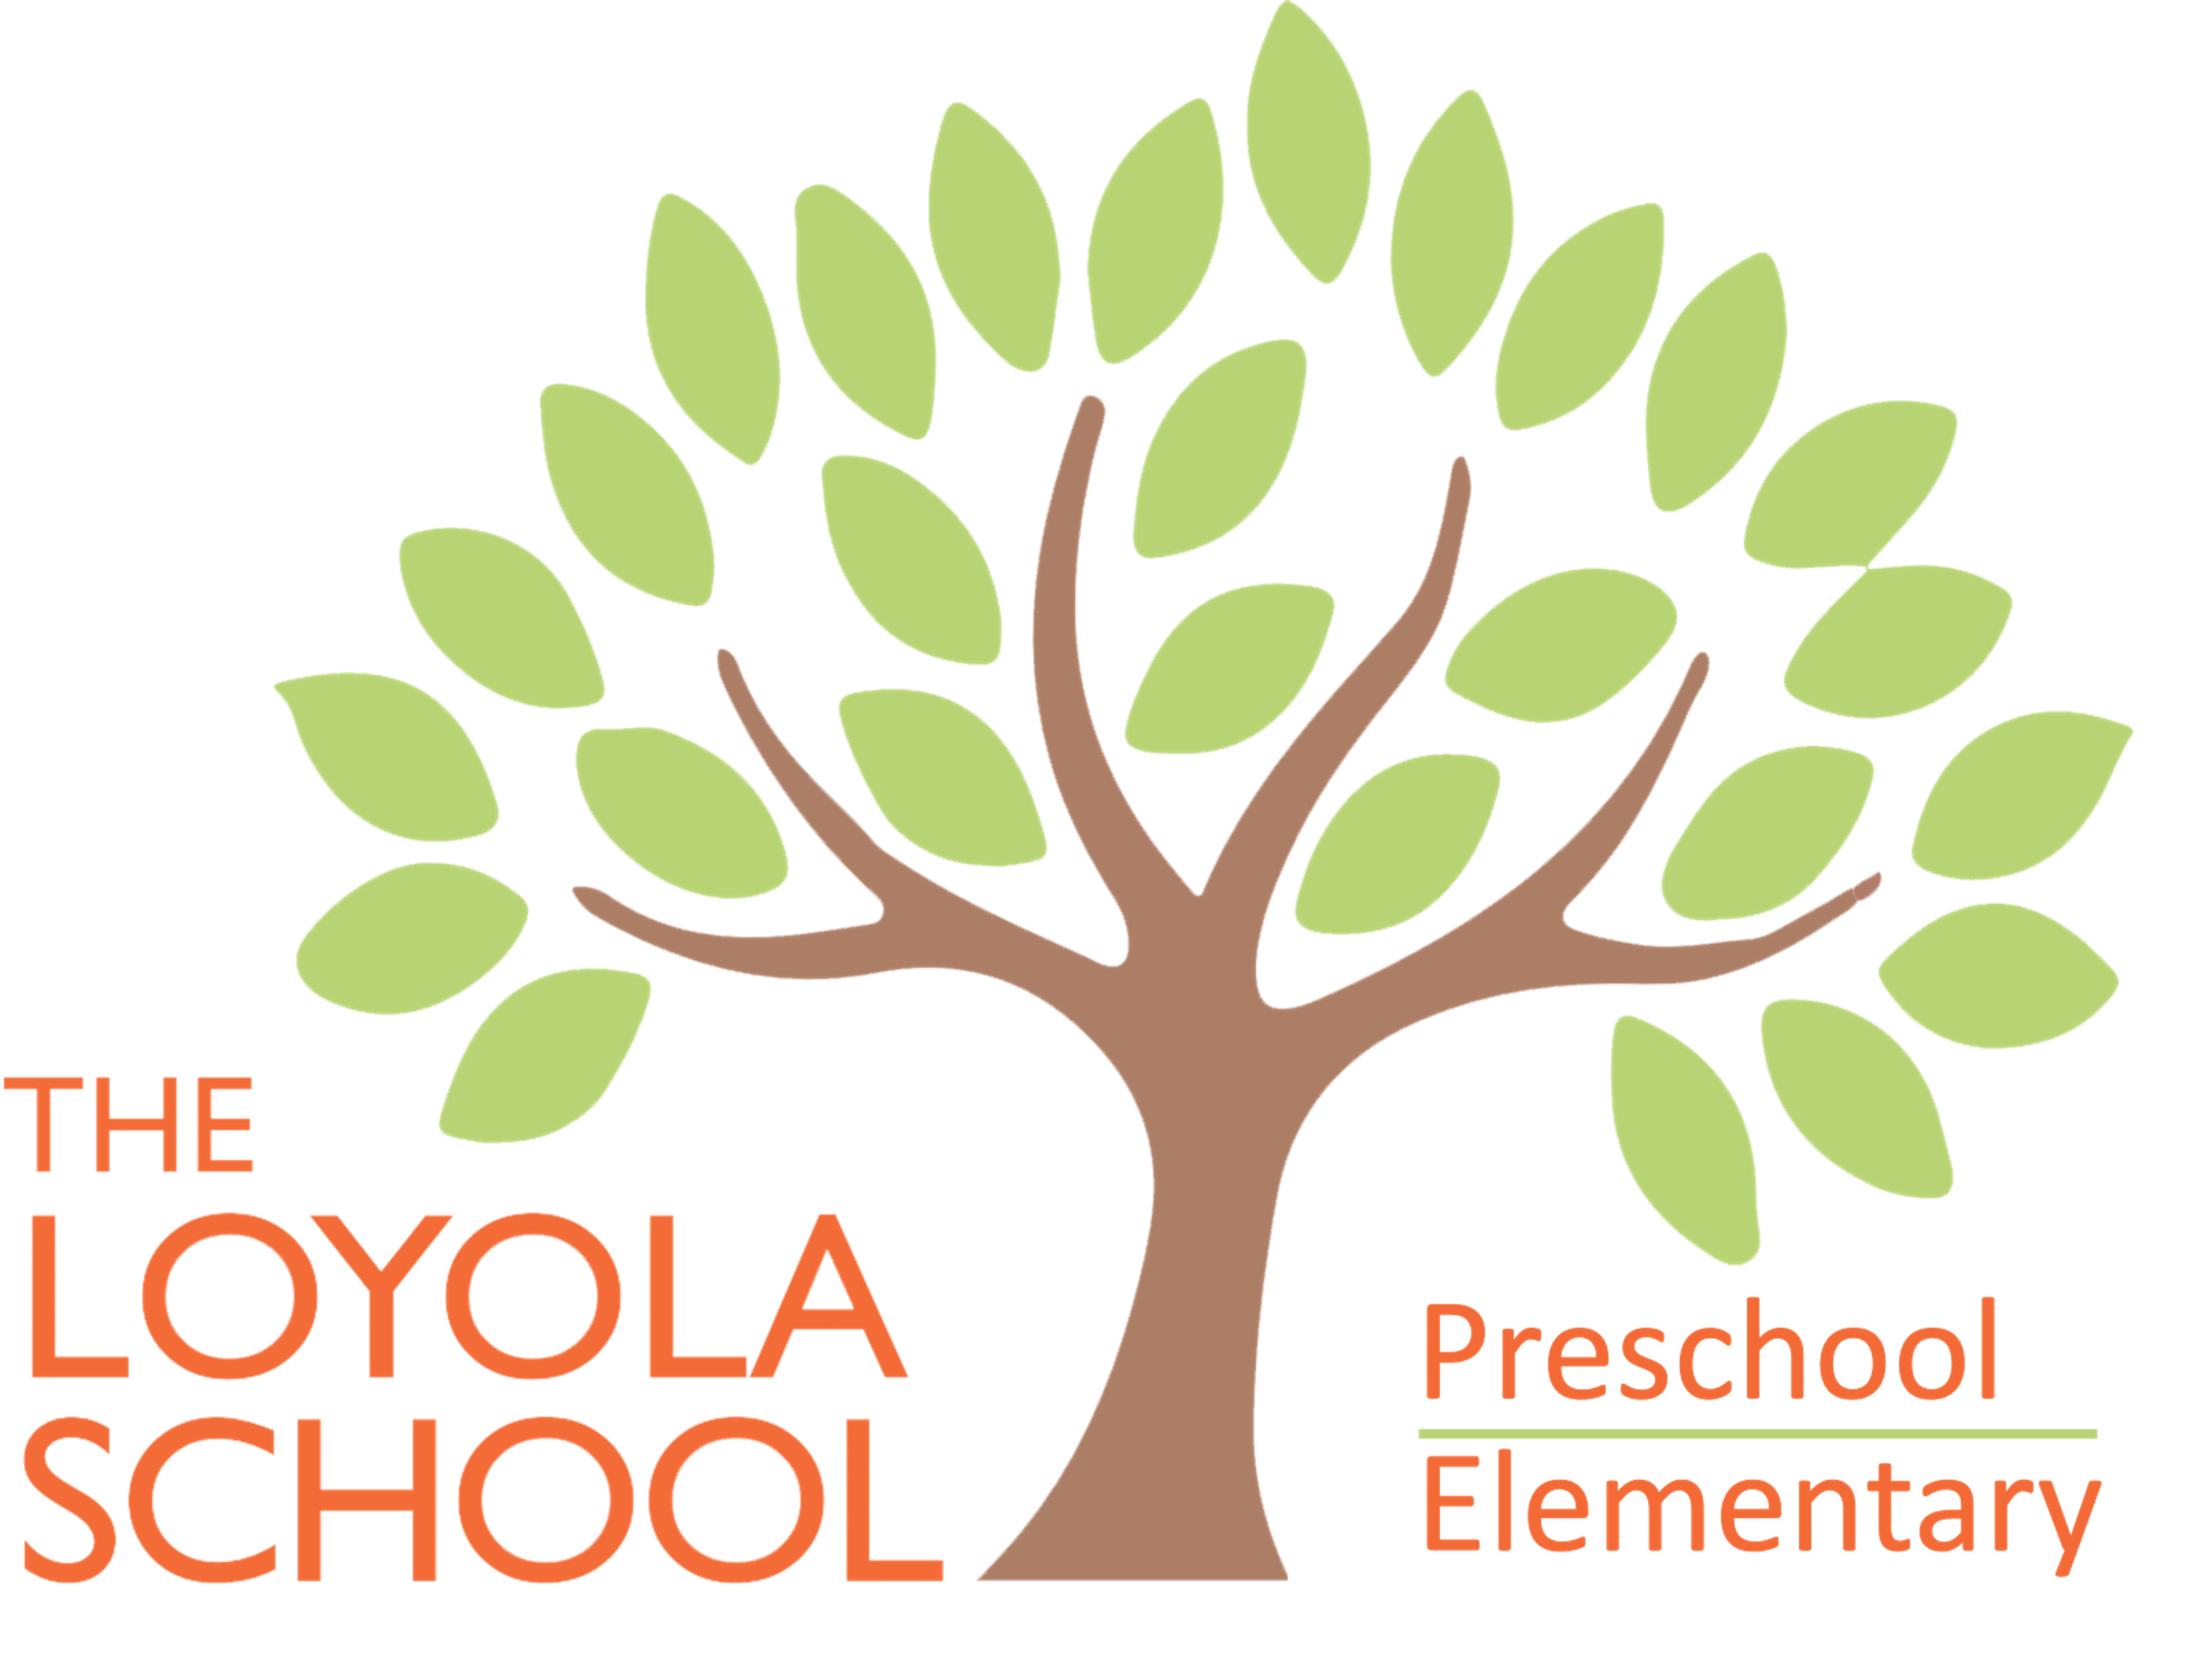 Loyola-School image